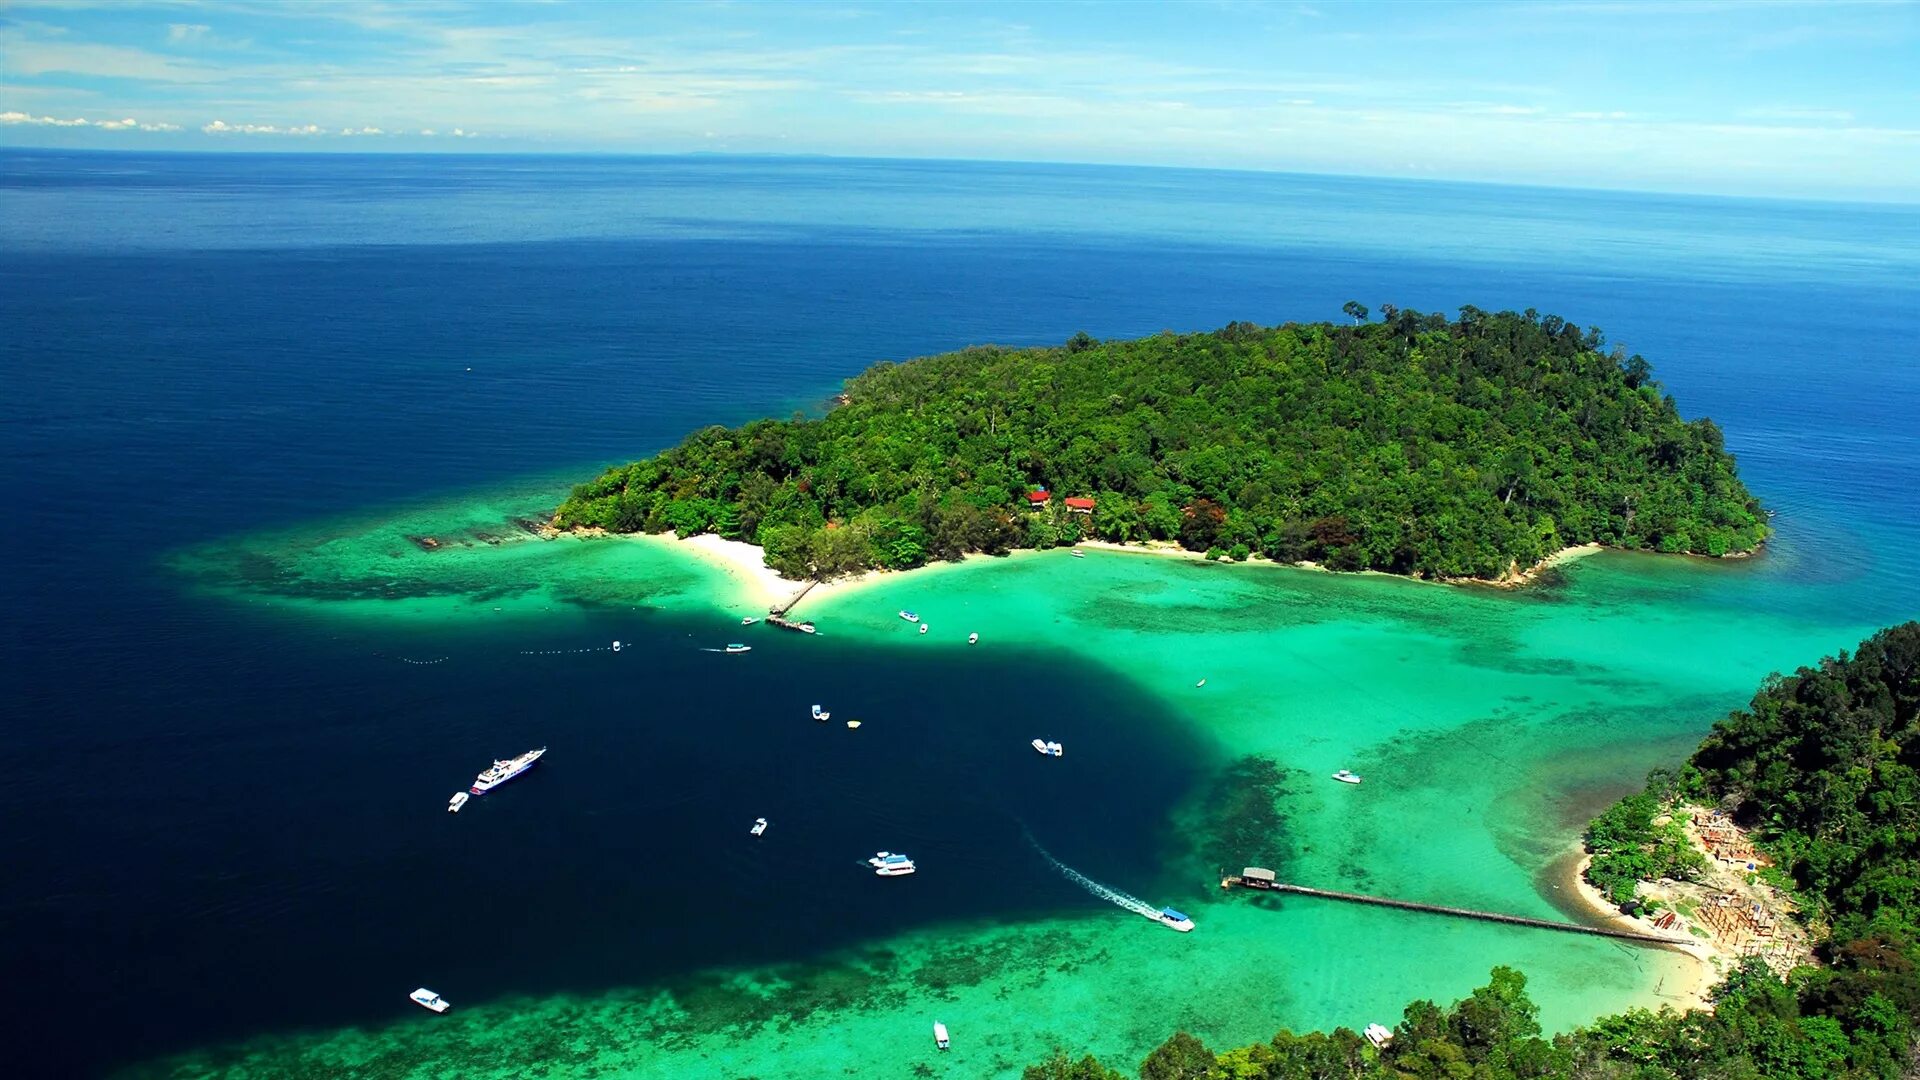 Остров калимантан 6. Морской парк тун Сакаран, Малайзия. Остров Калимантан. Борнео Малайзия. Остров Калимантан океан.